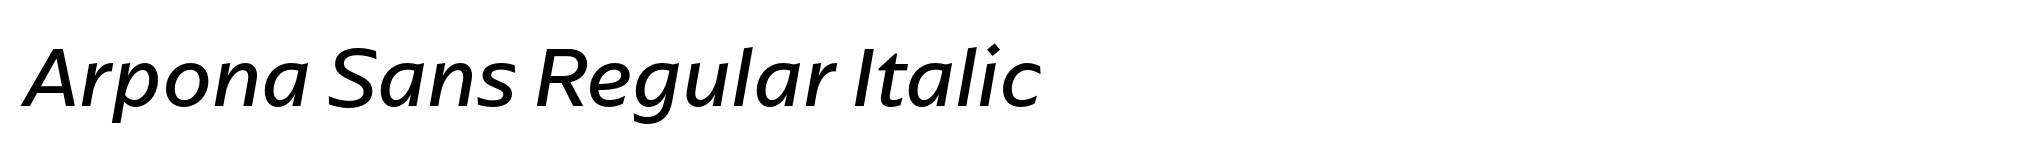 Arpona Sans Regular Italic image